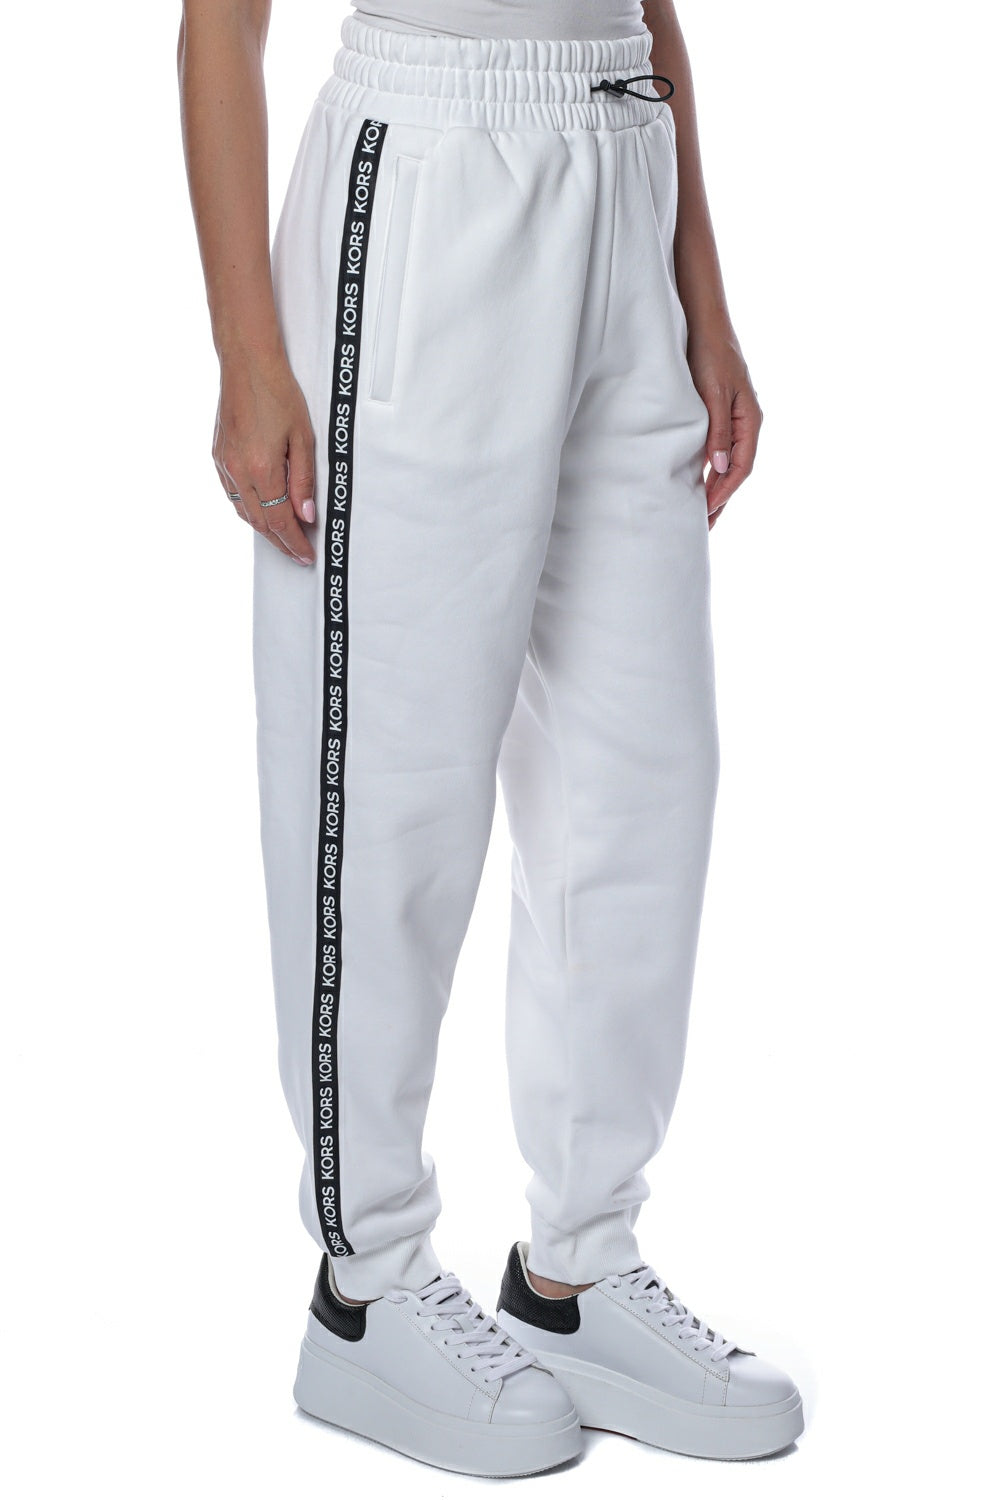 Pantaloni sport Michael Kors cu vipusca contrastanta